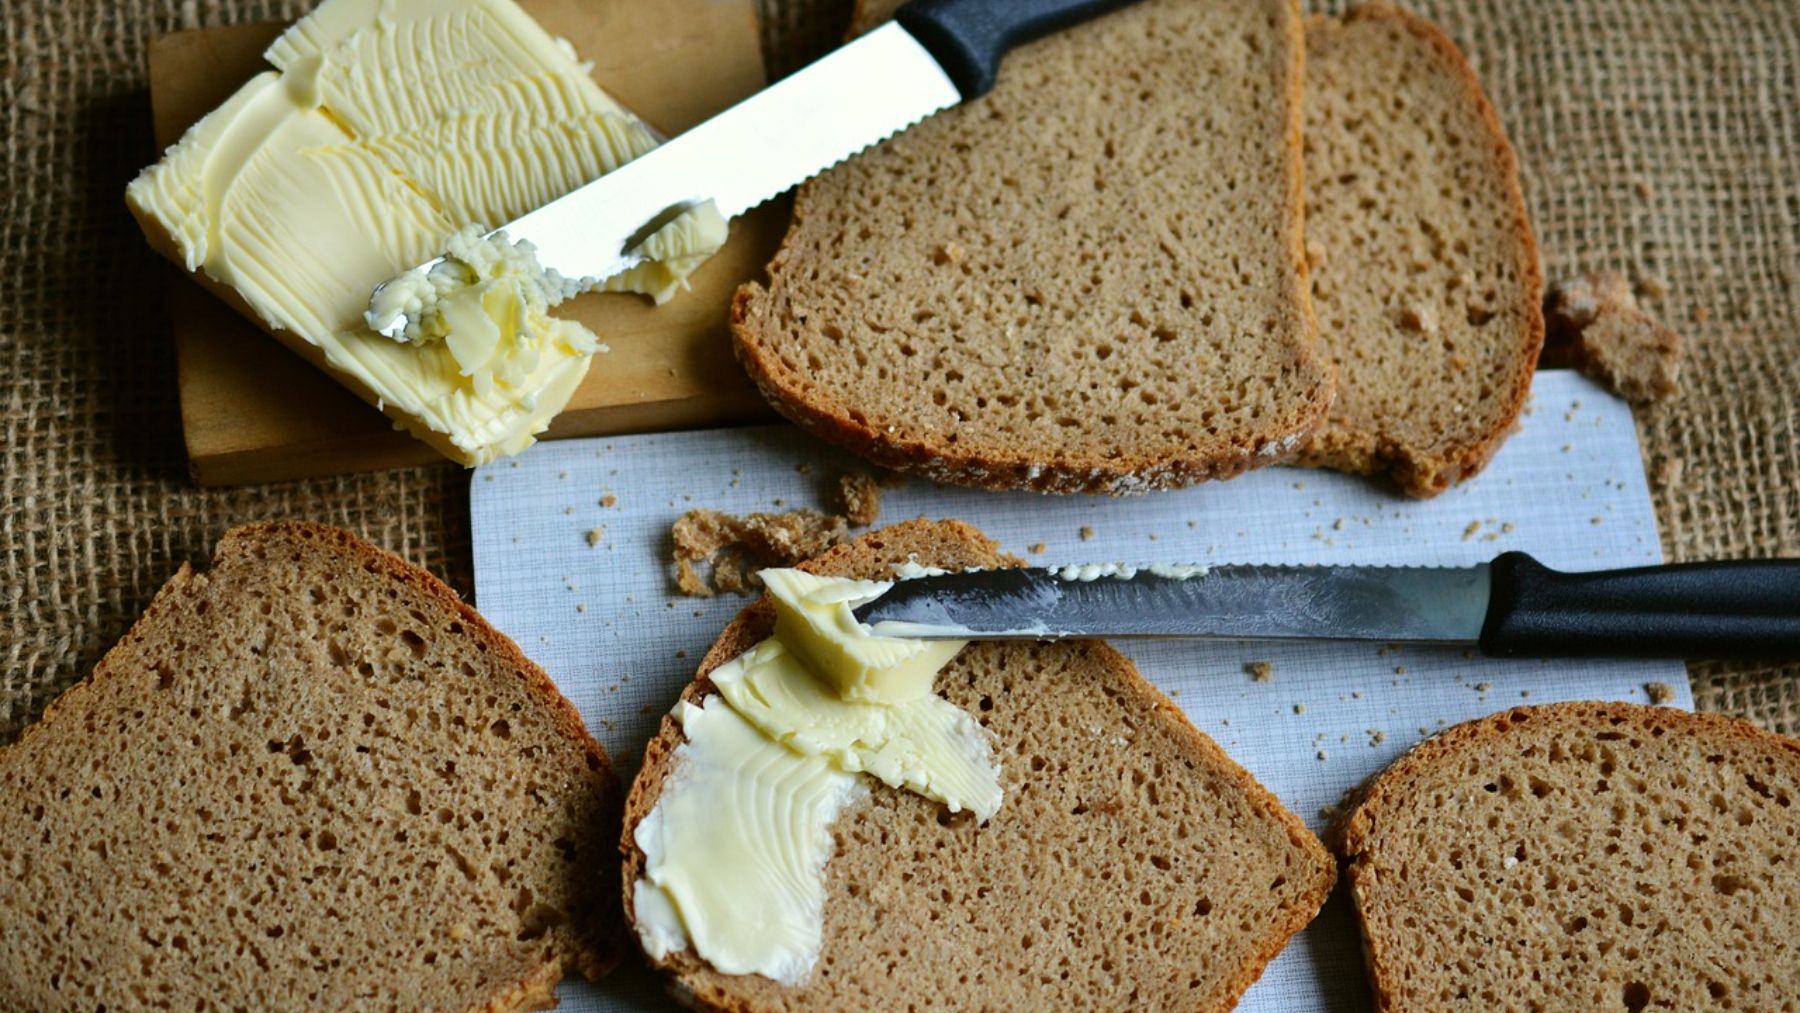 las tostadas, ¿mejor con mantequilla o con margarina?